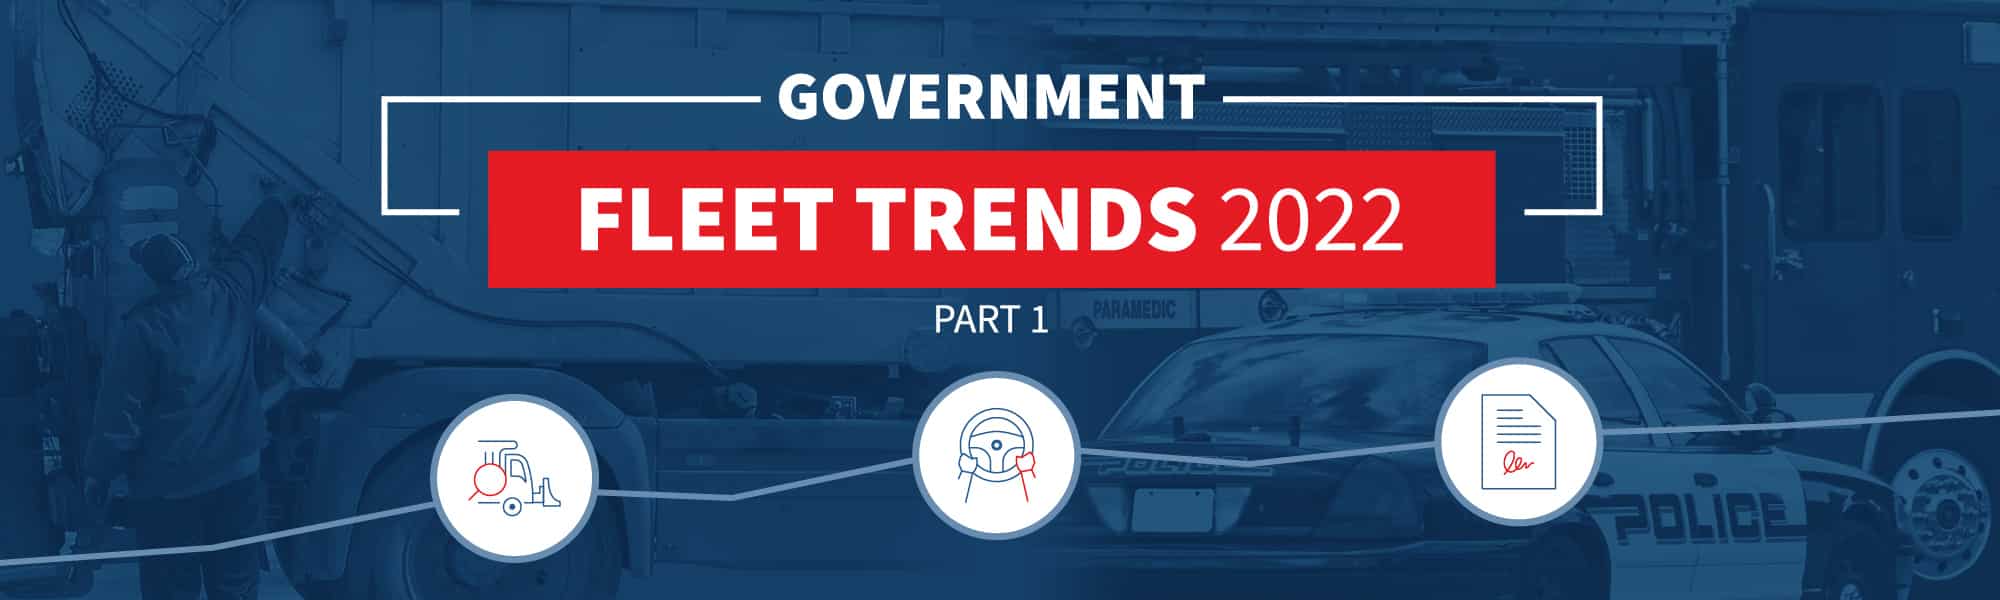 Government Fleet Trends 2022